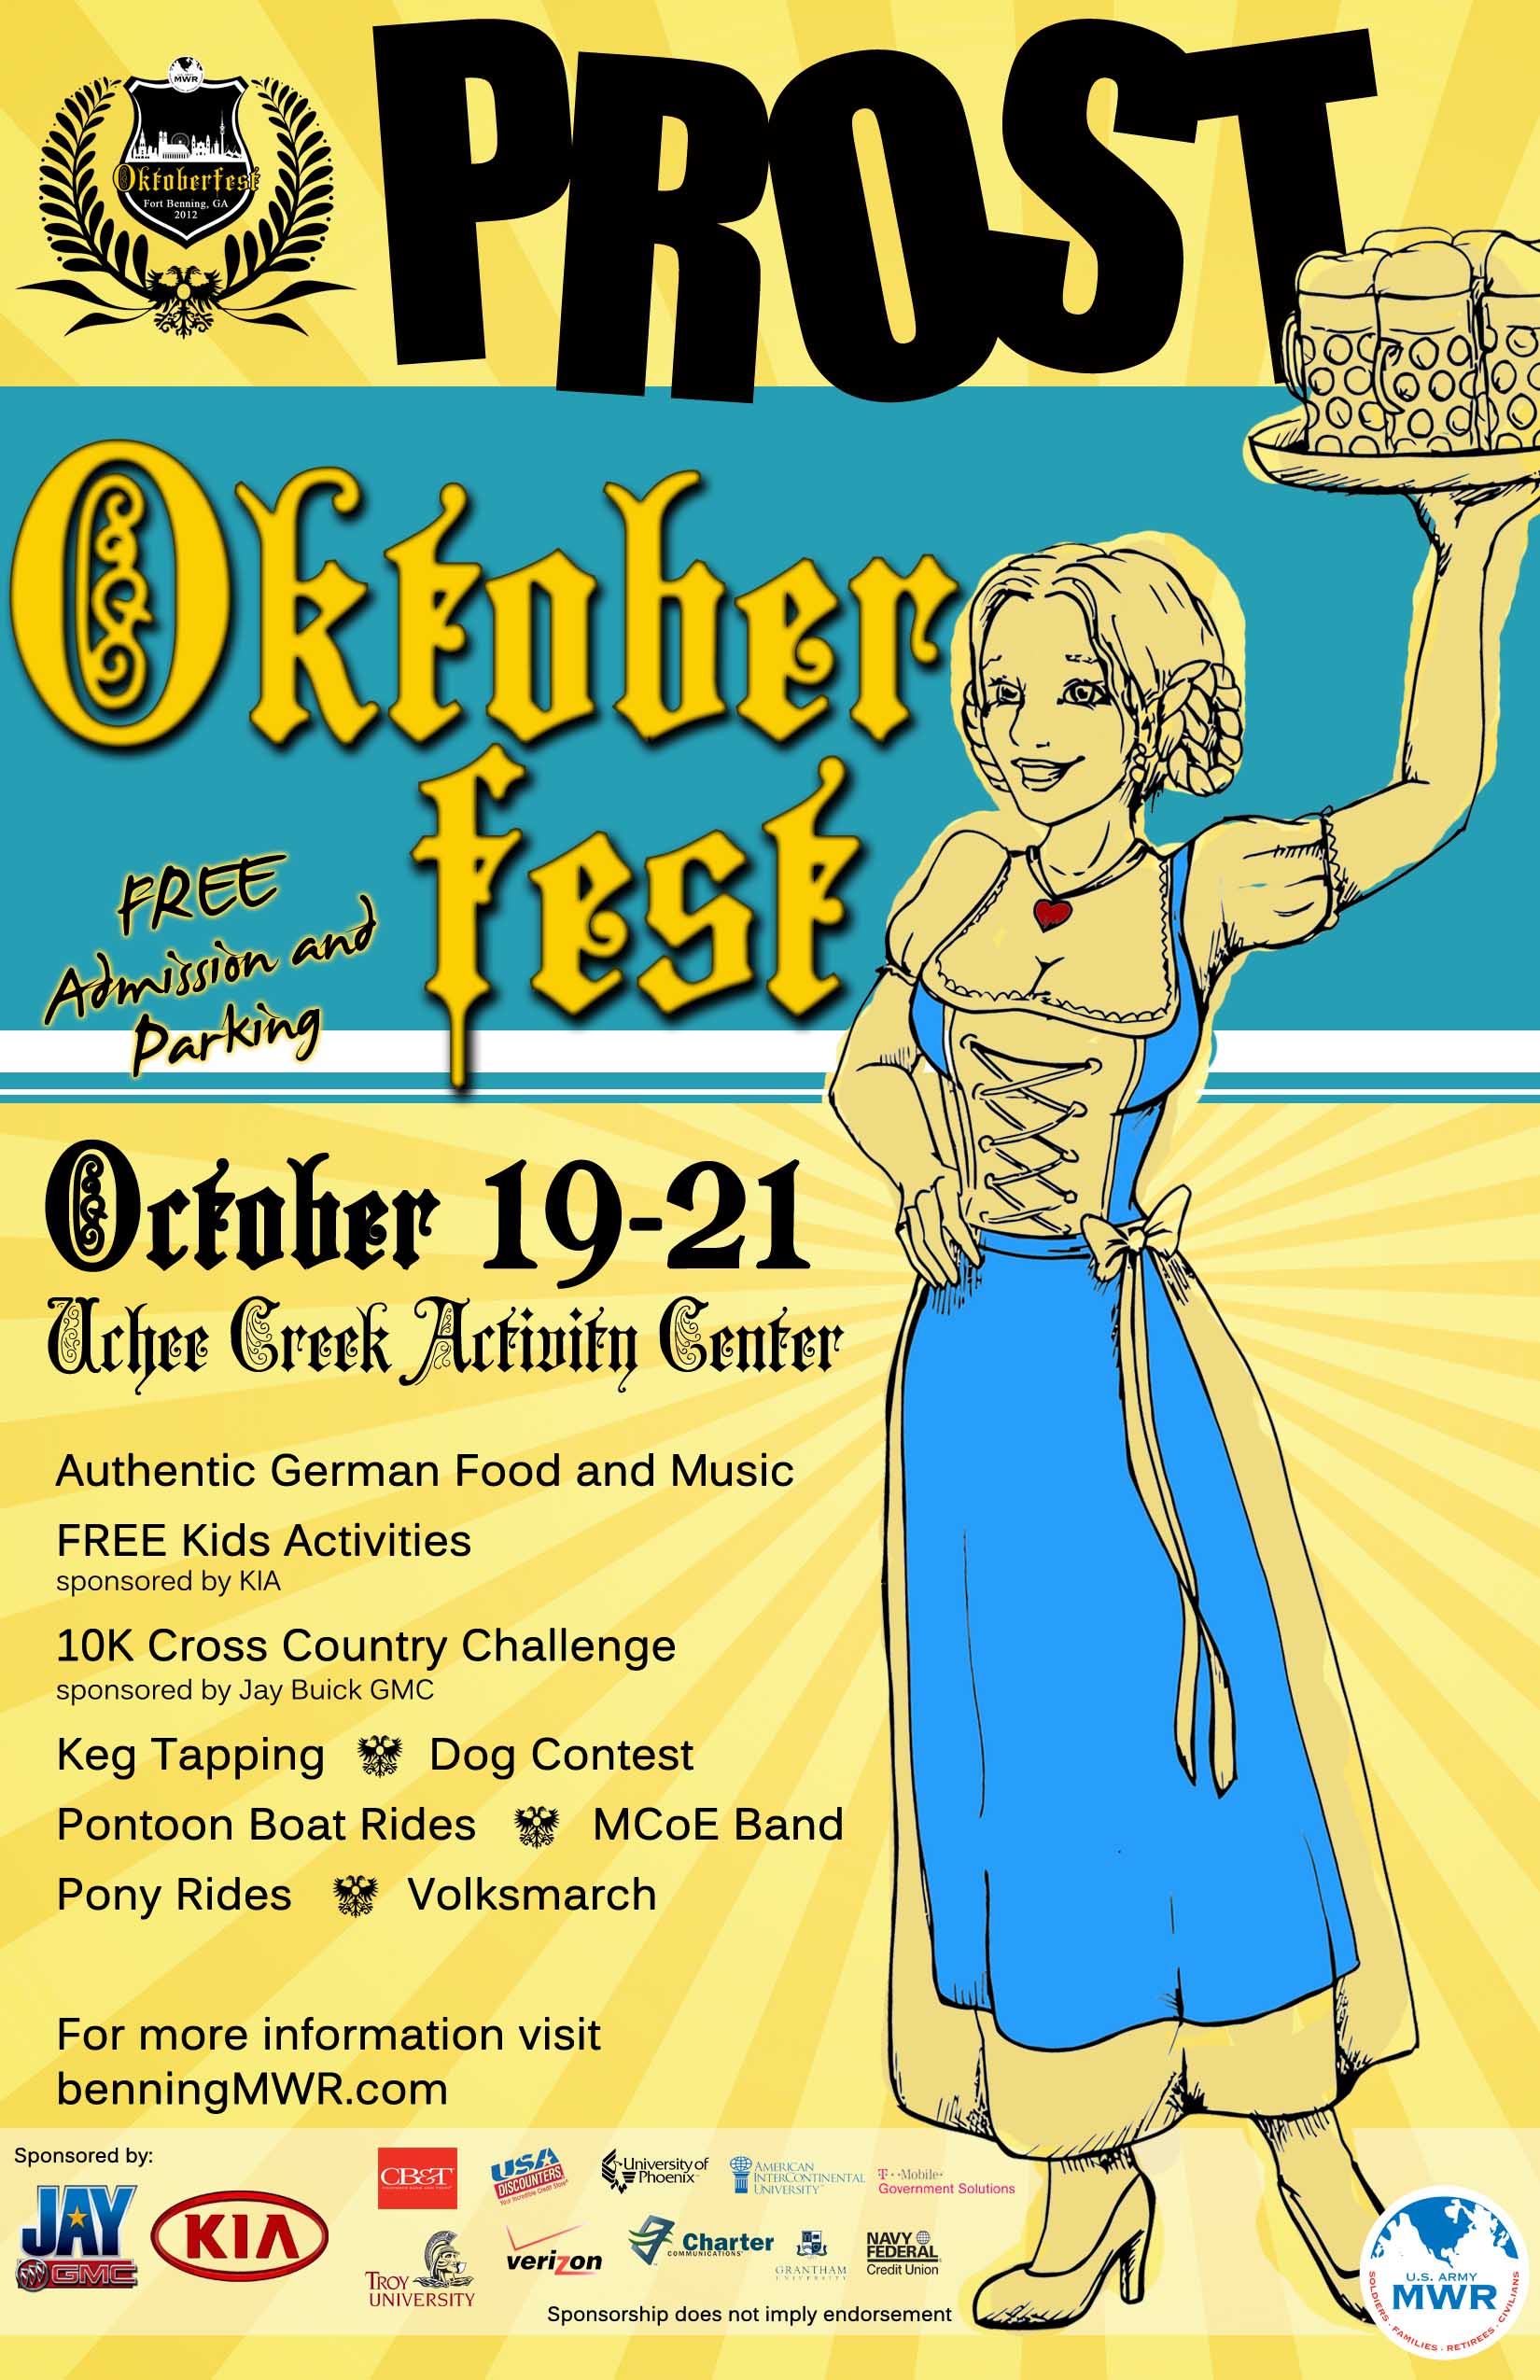 Oktoberfest @ Uchee Creek Activity Center